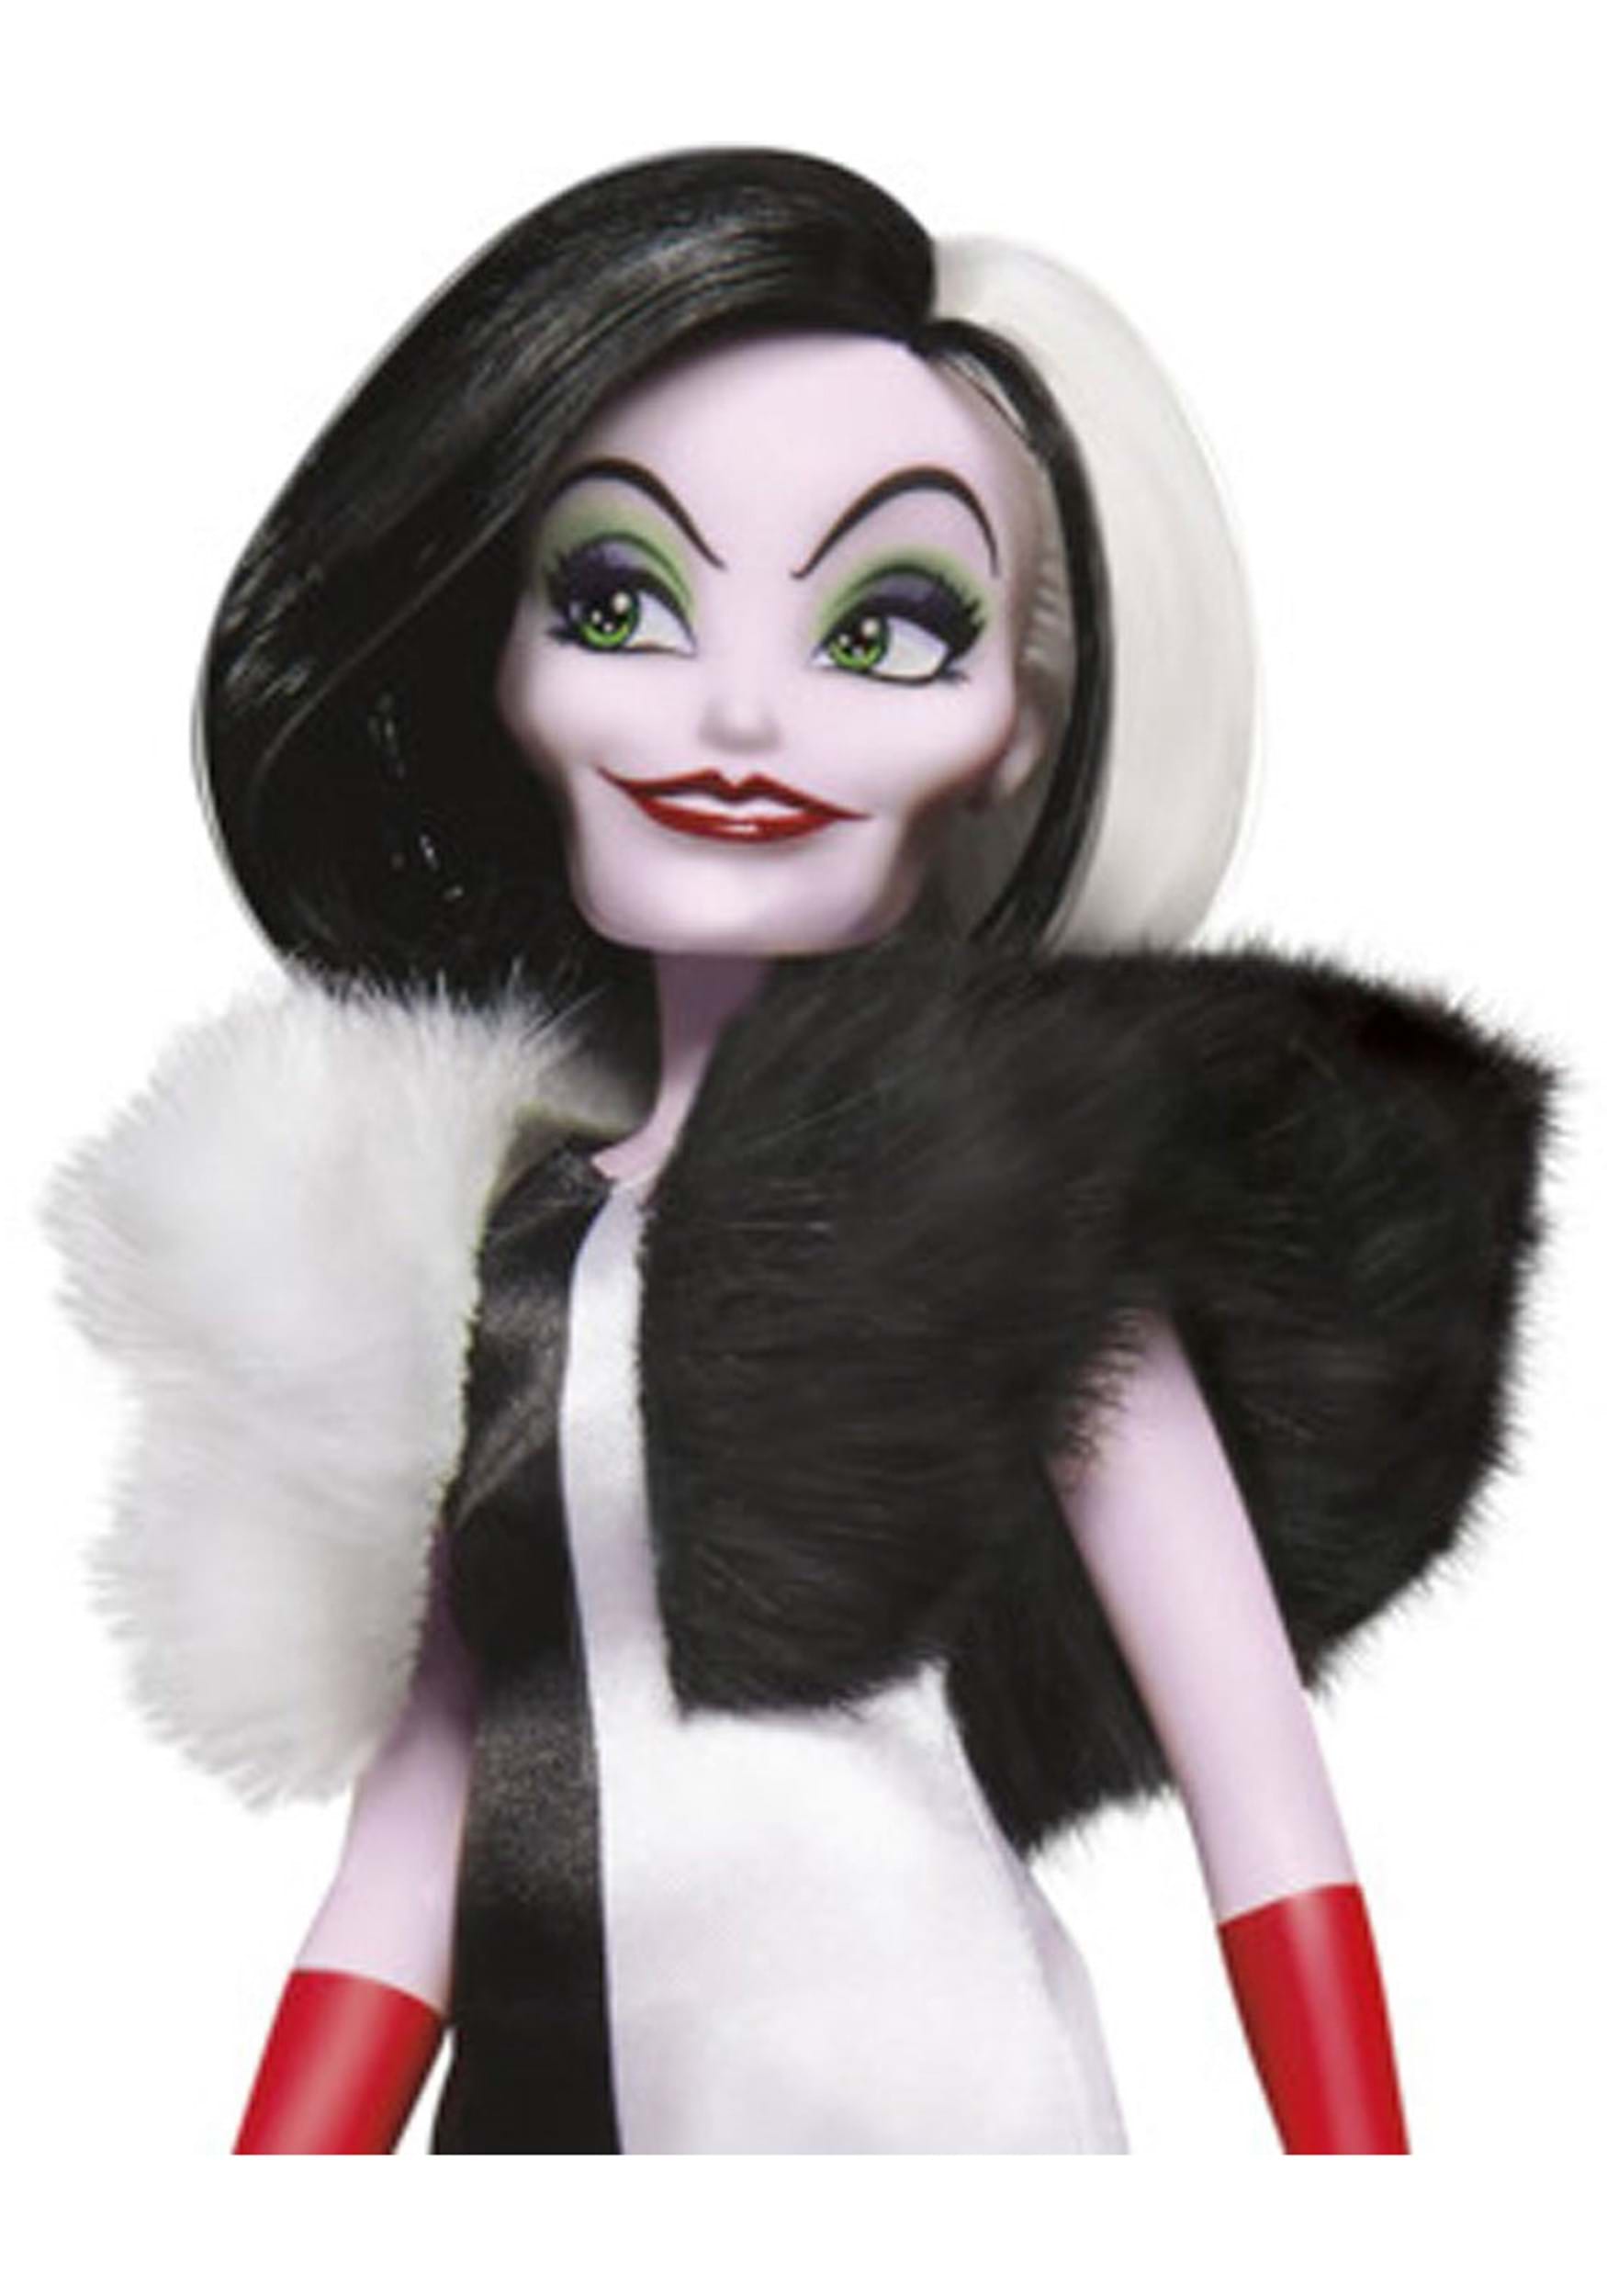 Cruella' Costume Designer on the Fashion Behind a Disney Villain